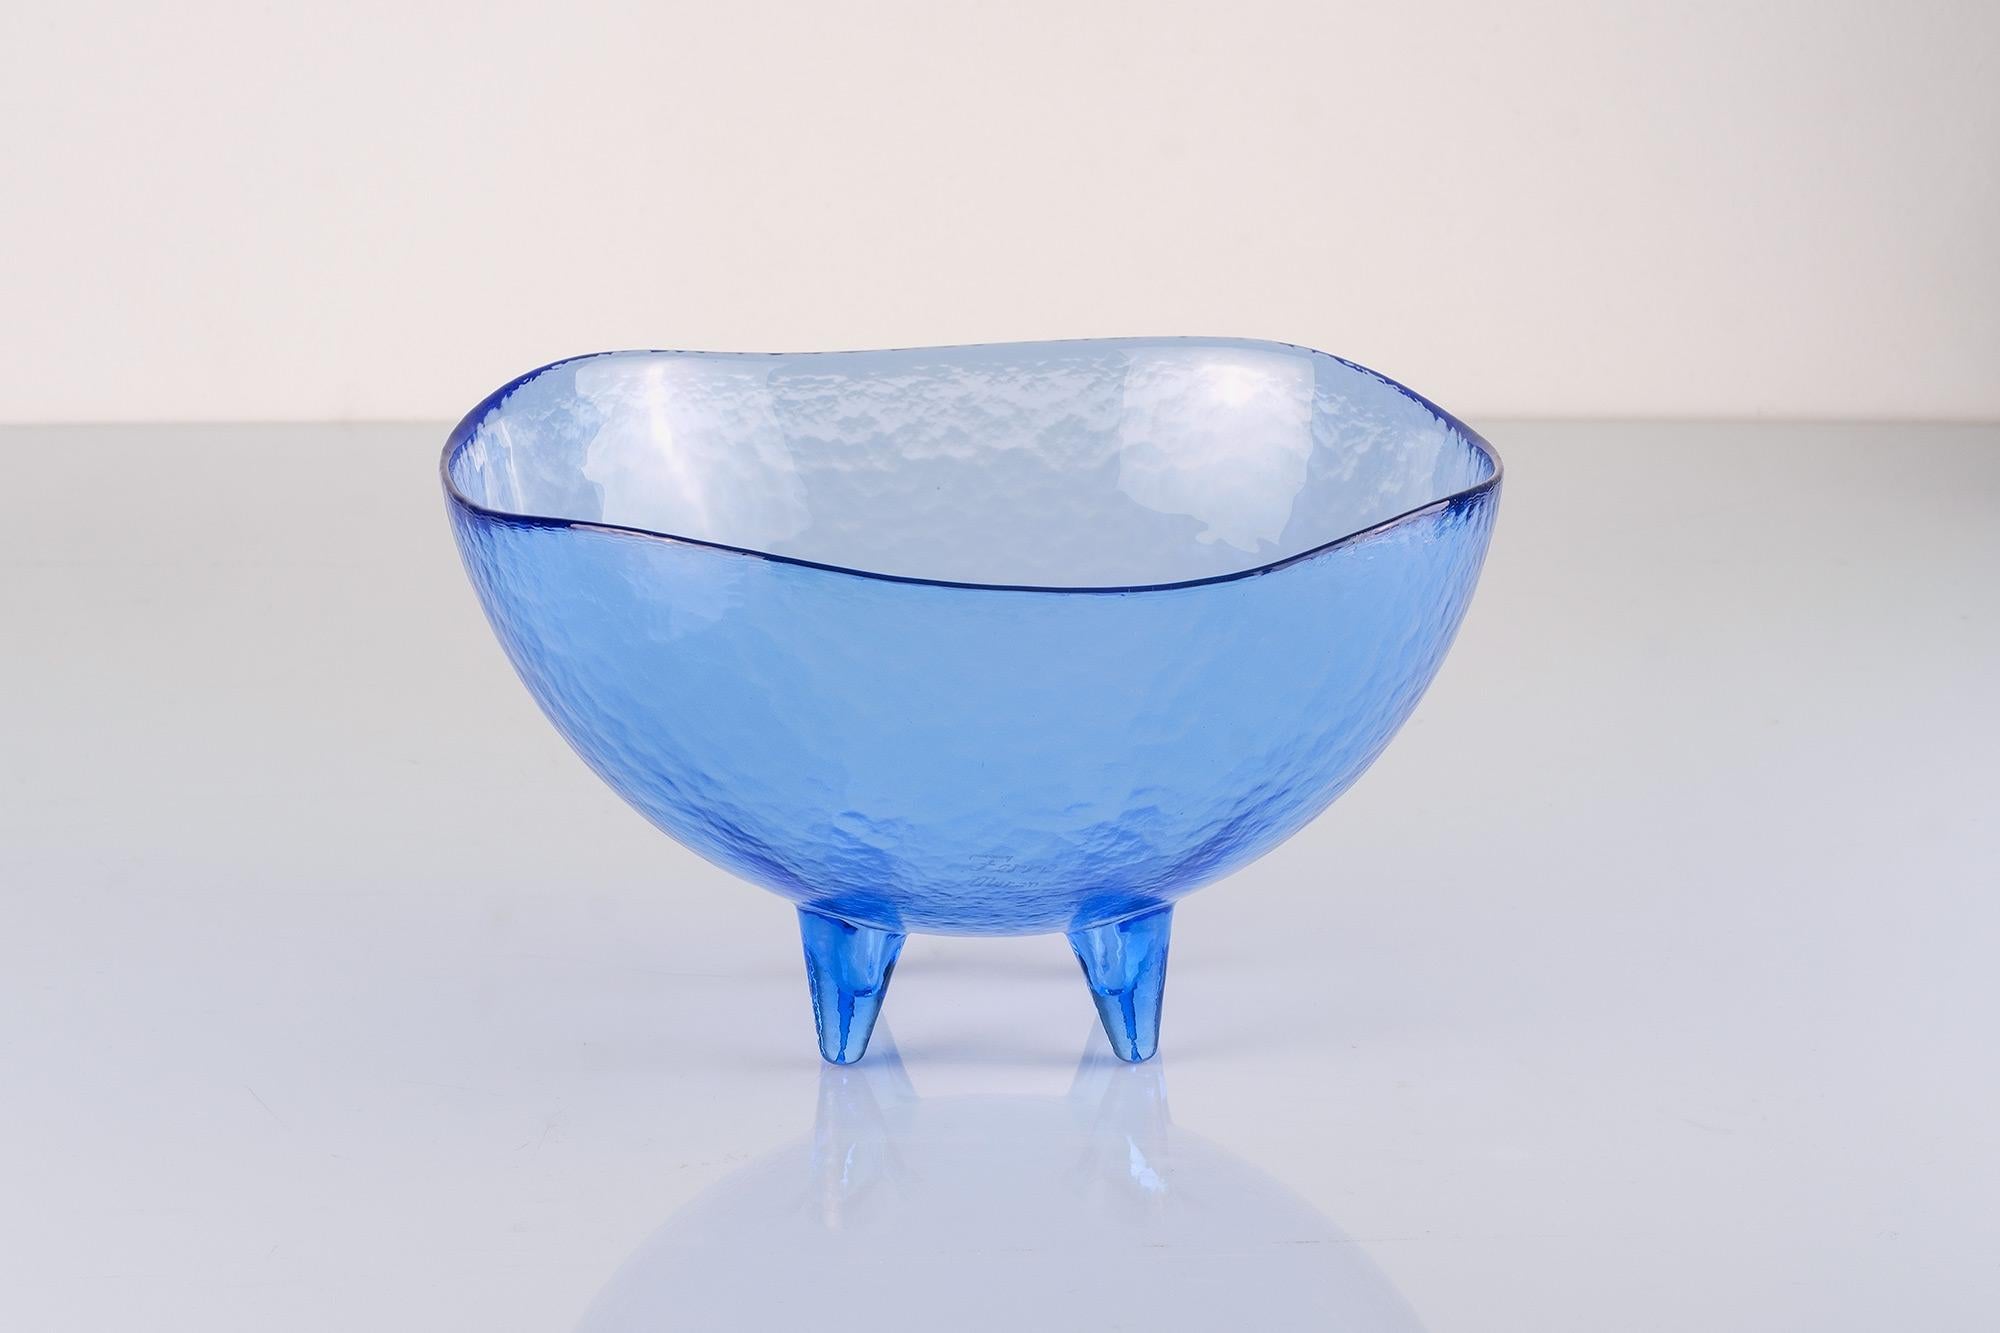 Splendid bowl in Murano Glass by Guido Ferro. 
Great form and color.
Signed Guido Ferro Murano on the bottom.